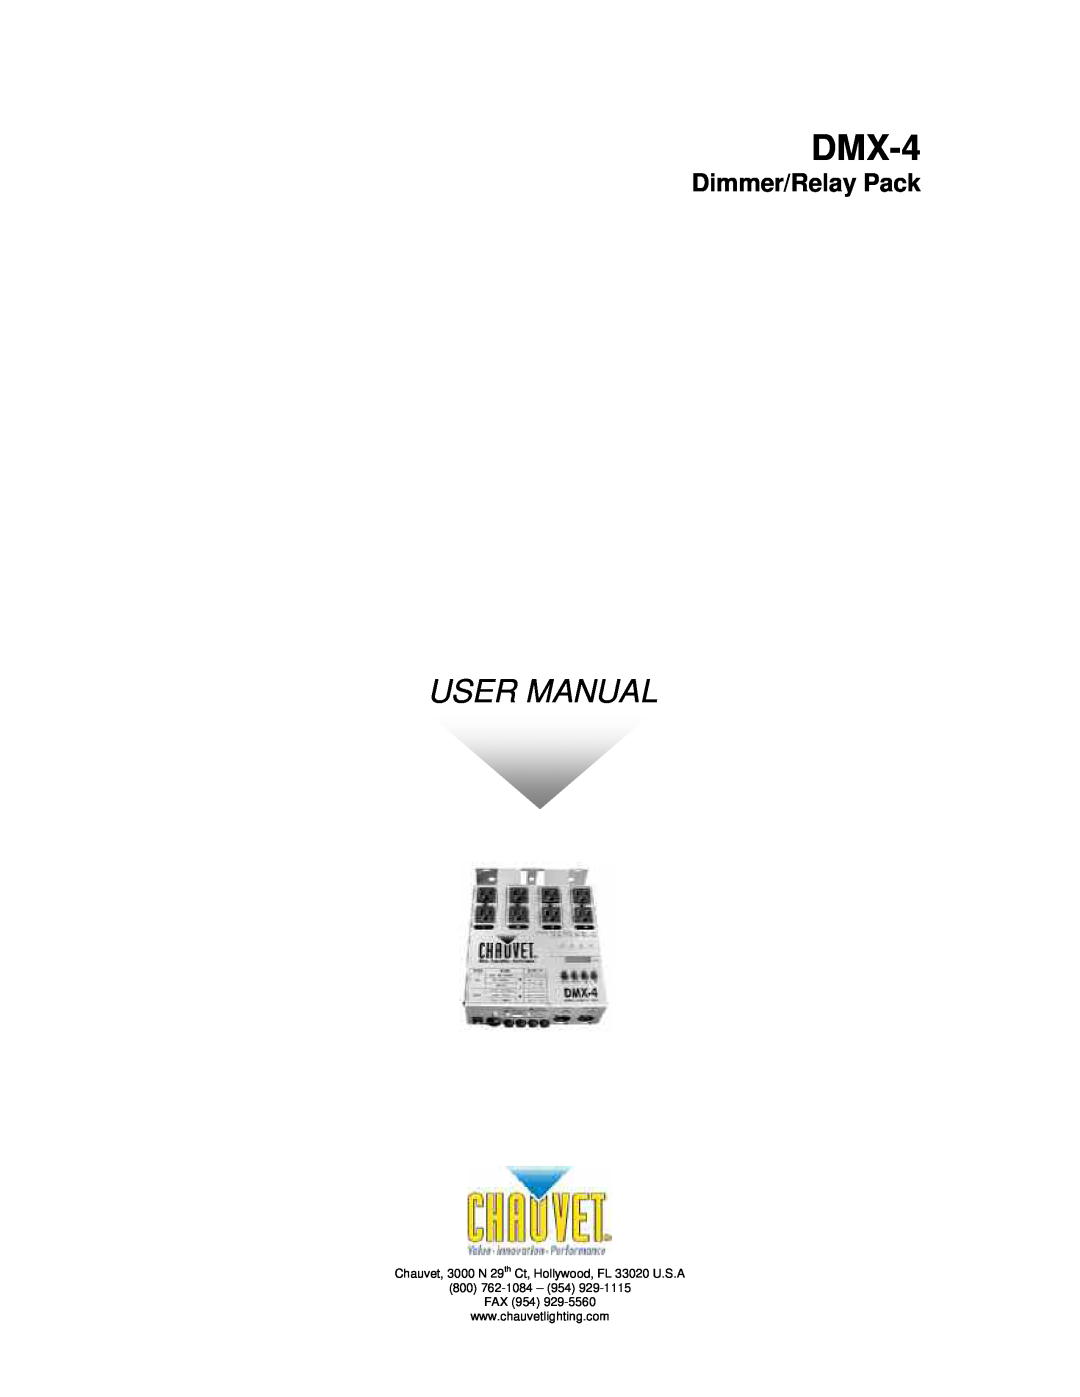 Chauvet DMX-4 user manual User Manual, Dimmer/Relay Pack 